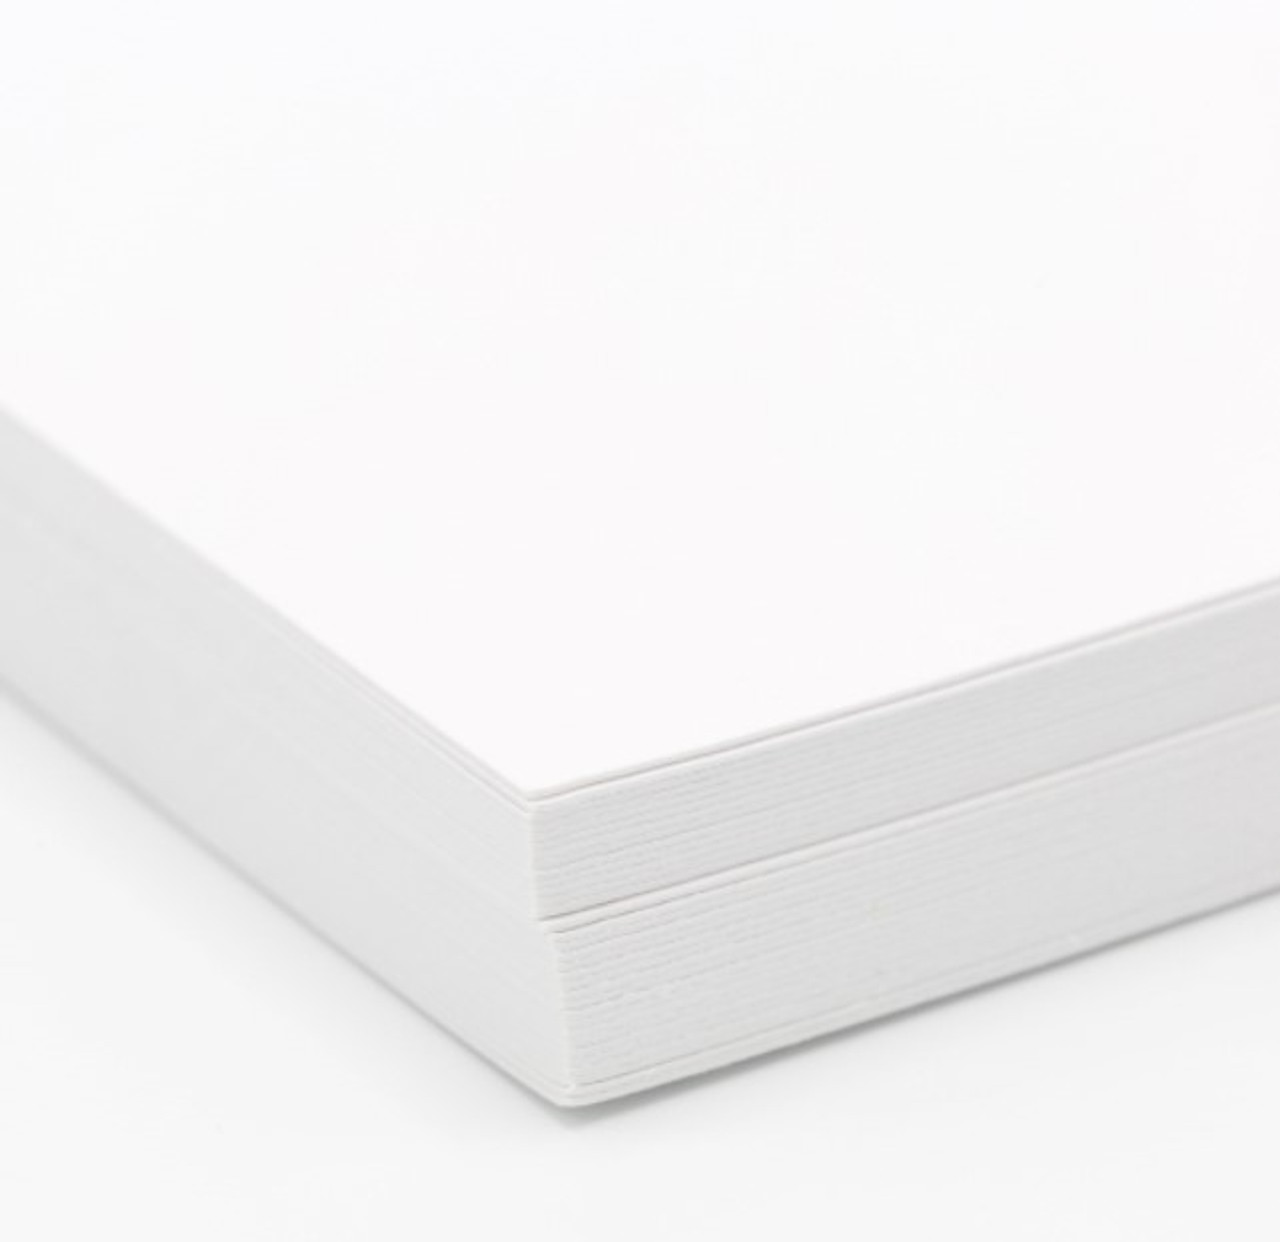 8.5 x 11 110 lbs White Index Paper 2,000/case